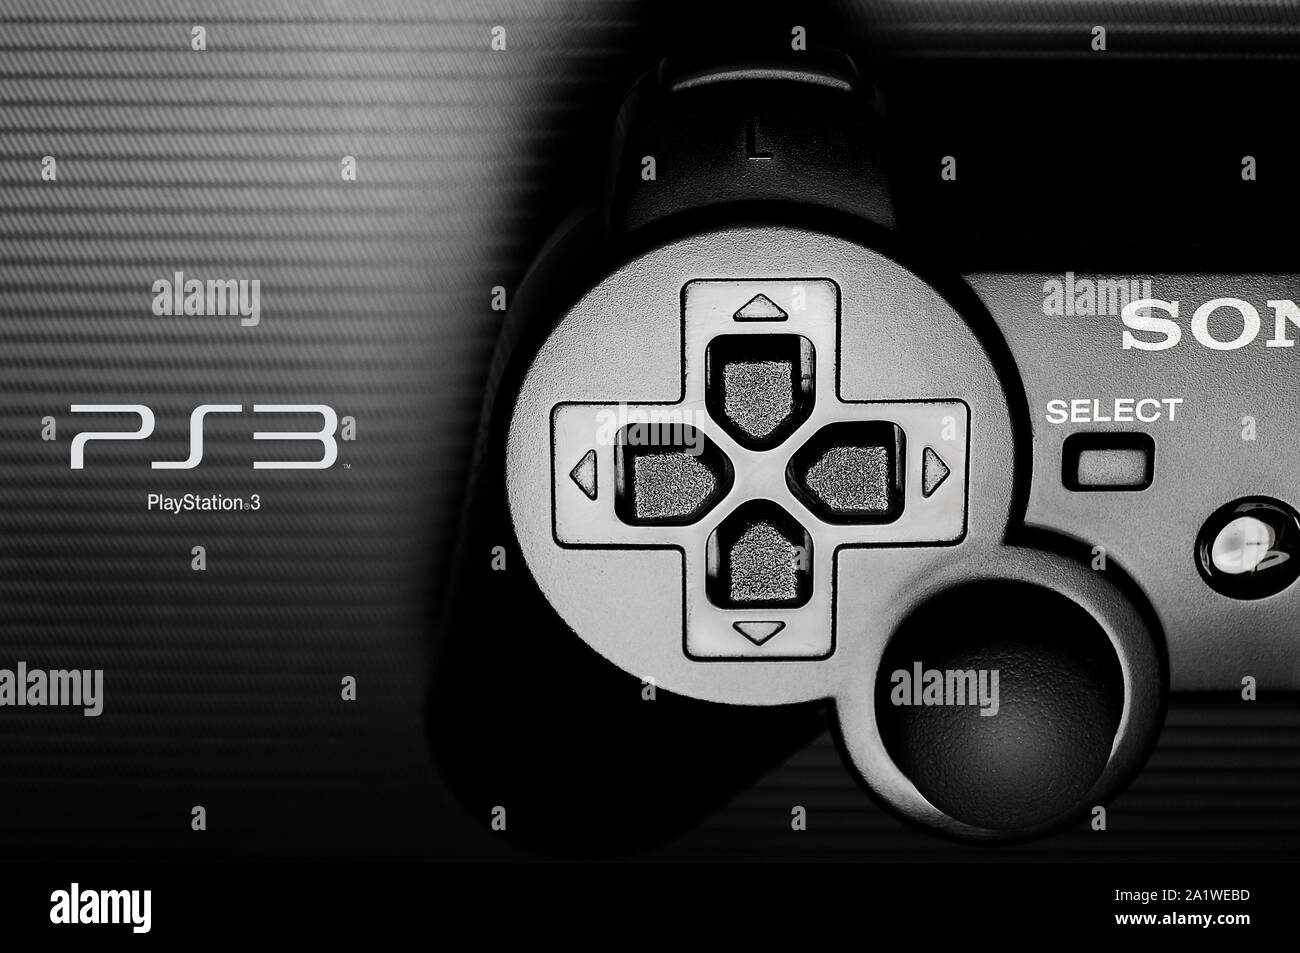 PlayStation 3 Dualshock 3 Wireless Controller (Black)